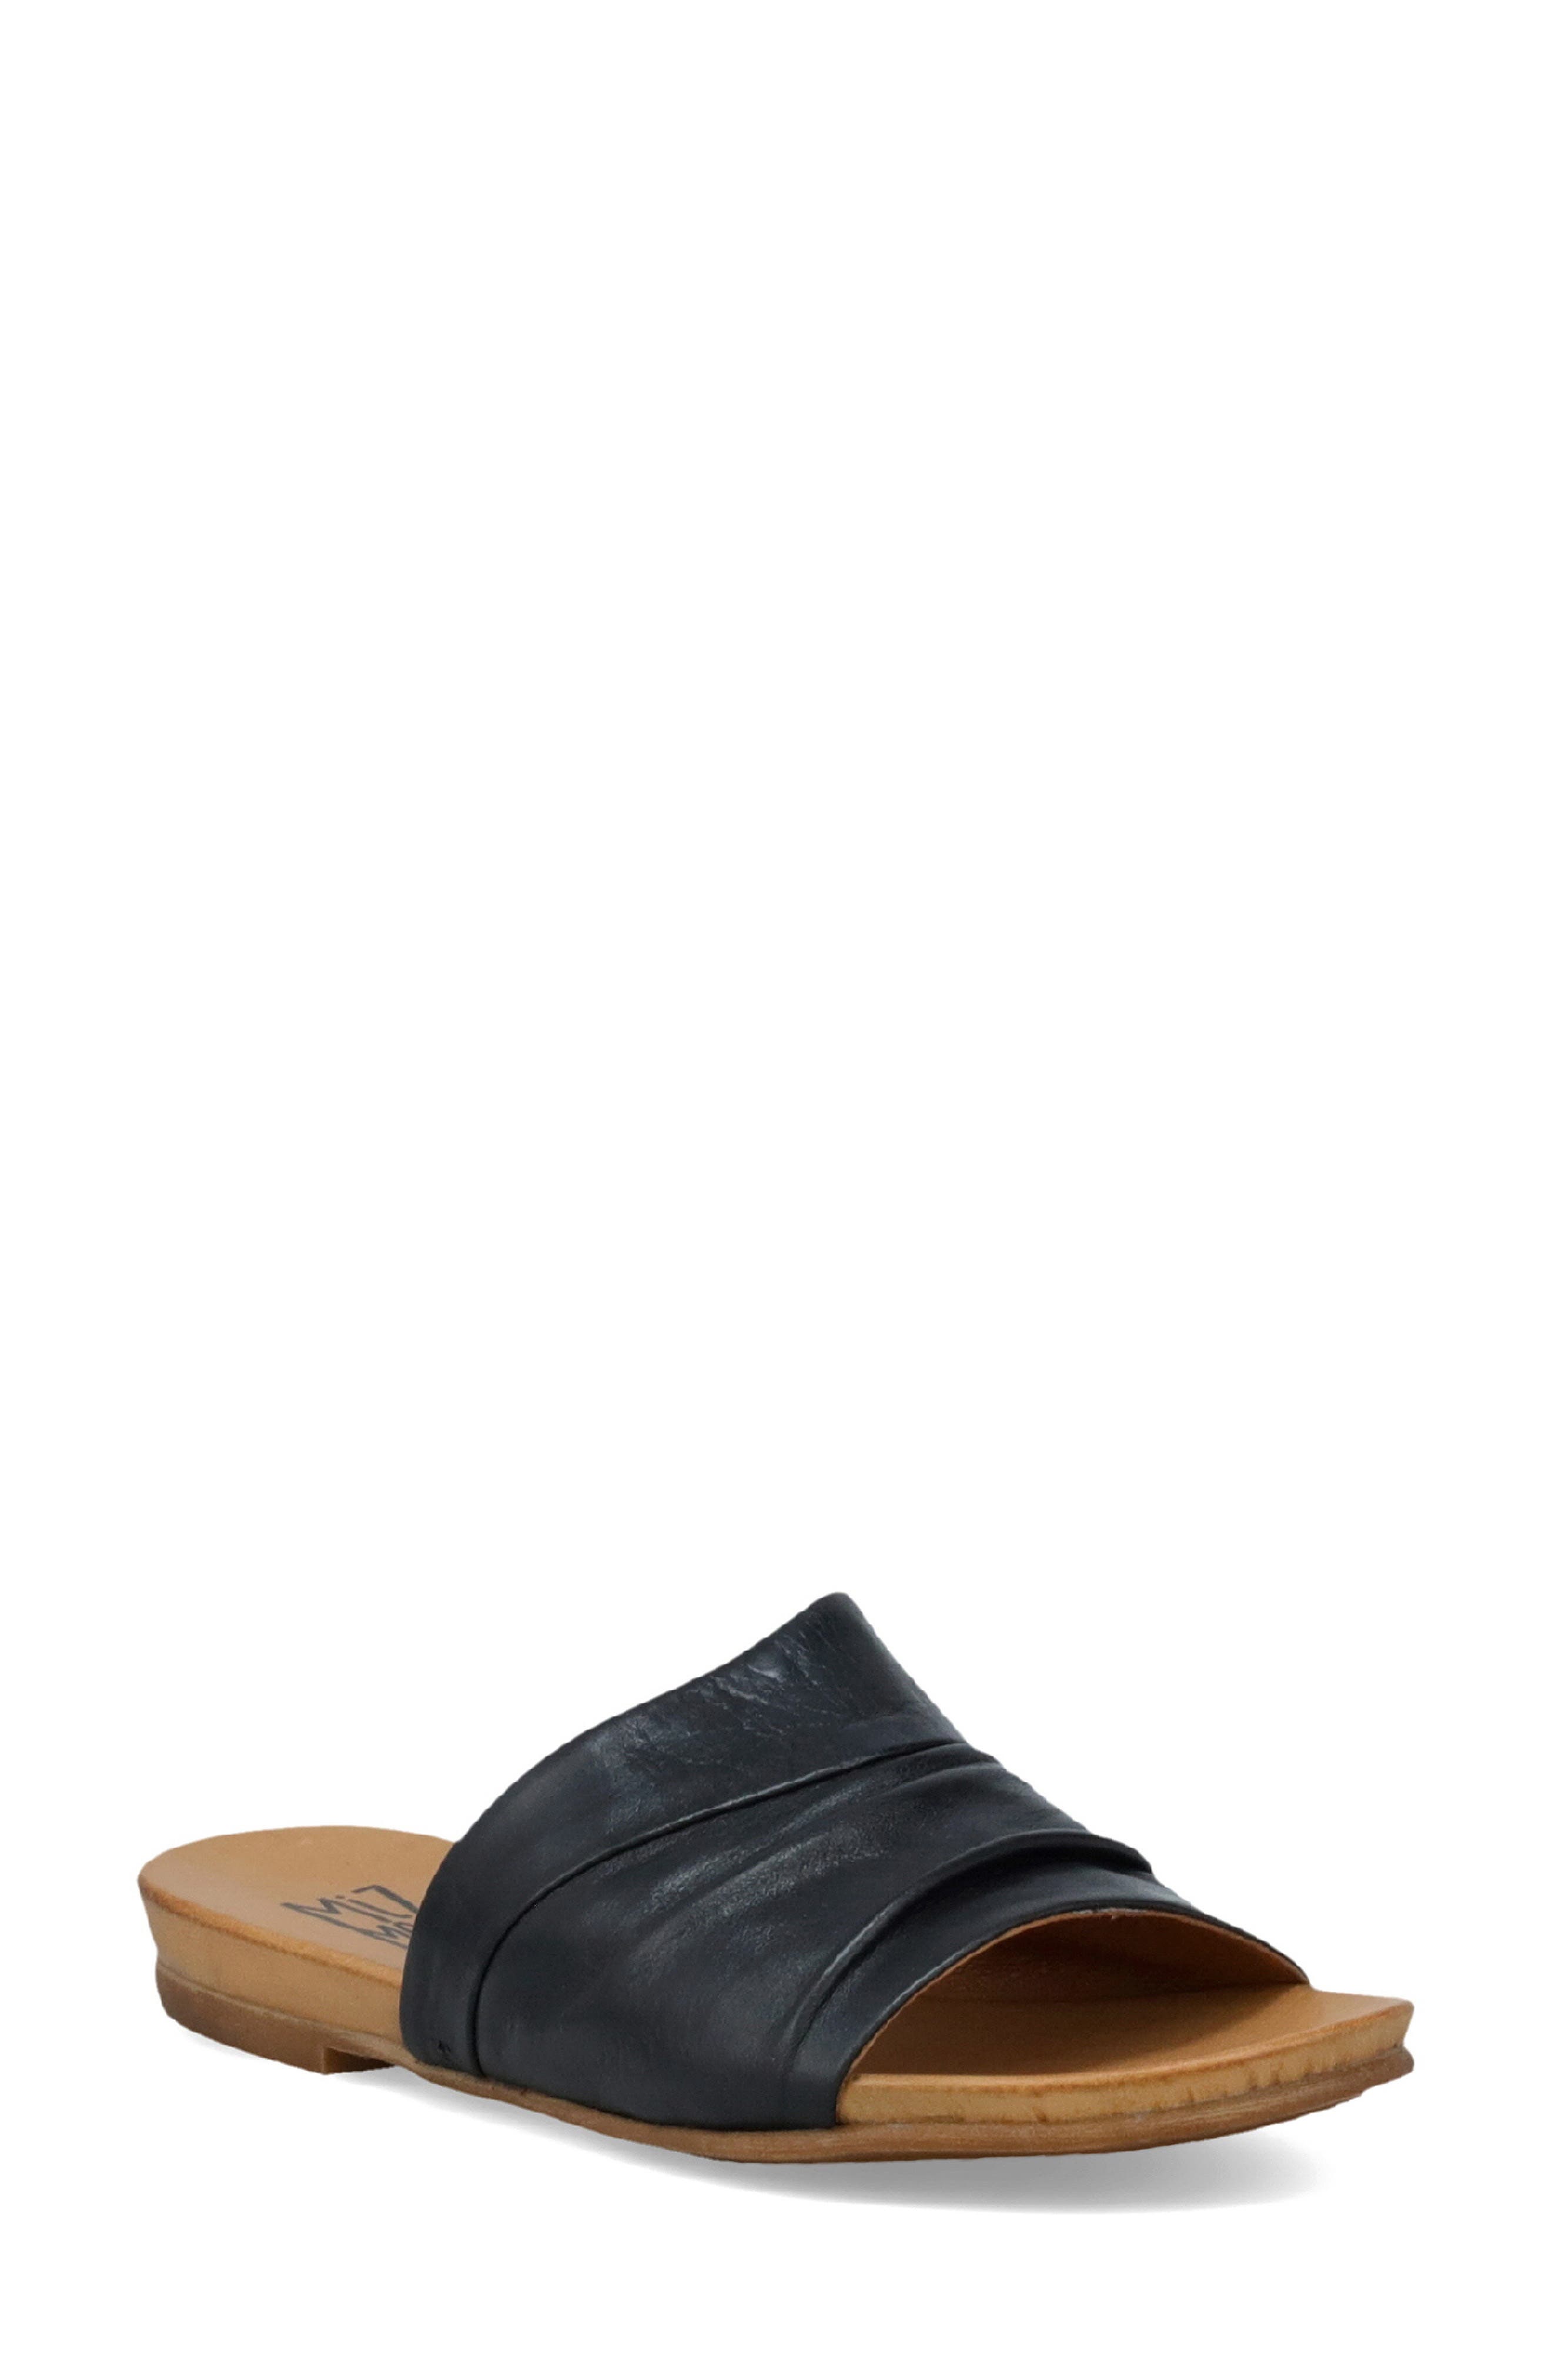 Women's Miz Mooz Aria Slide Sandal, Size 9.5 M - Black